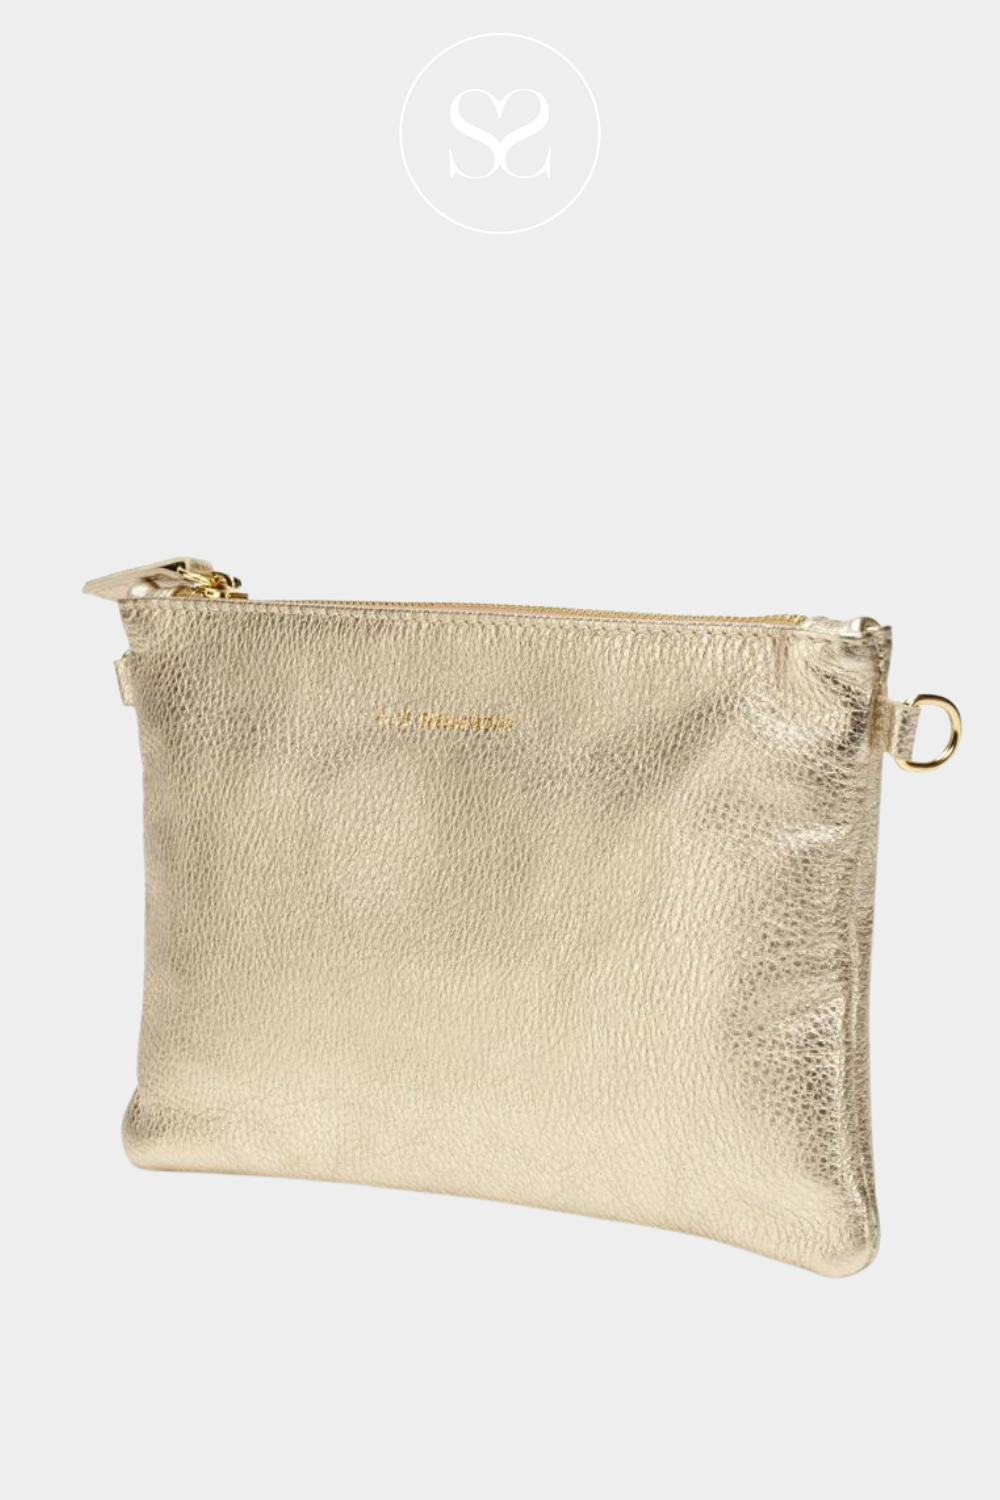 gold pouch crossbody bag Ireland